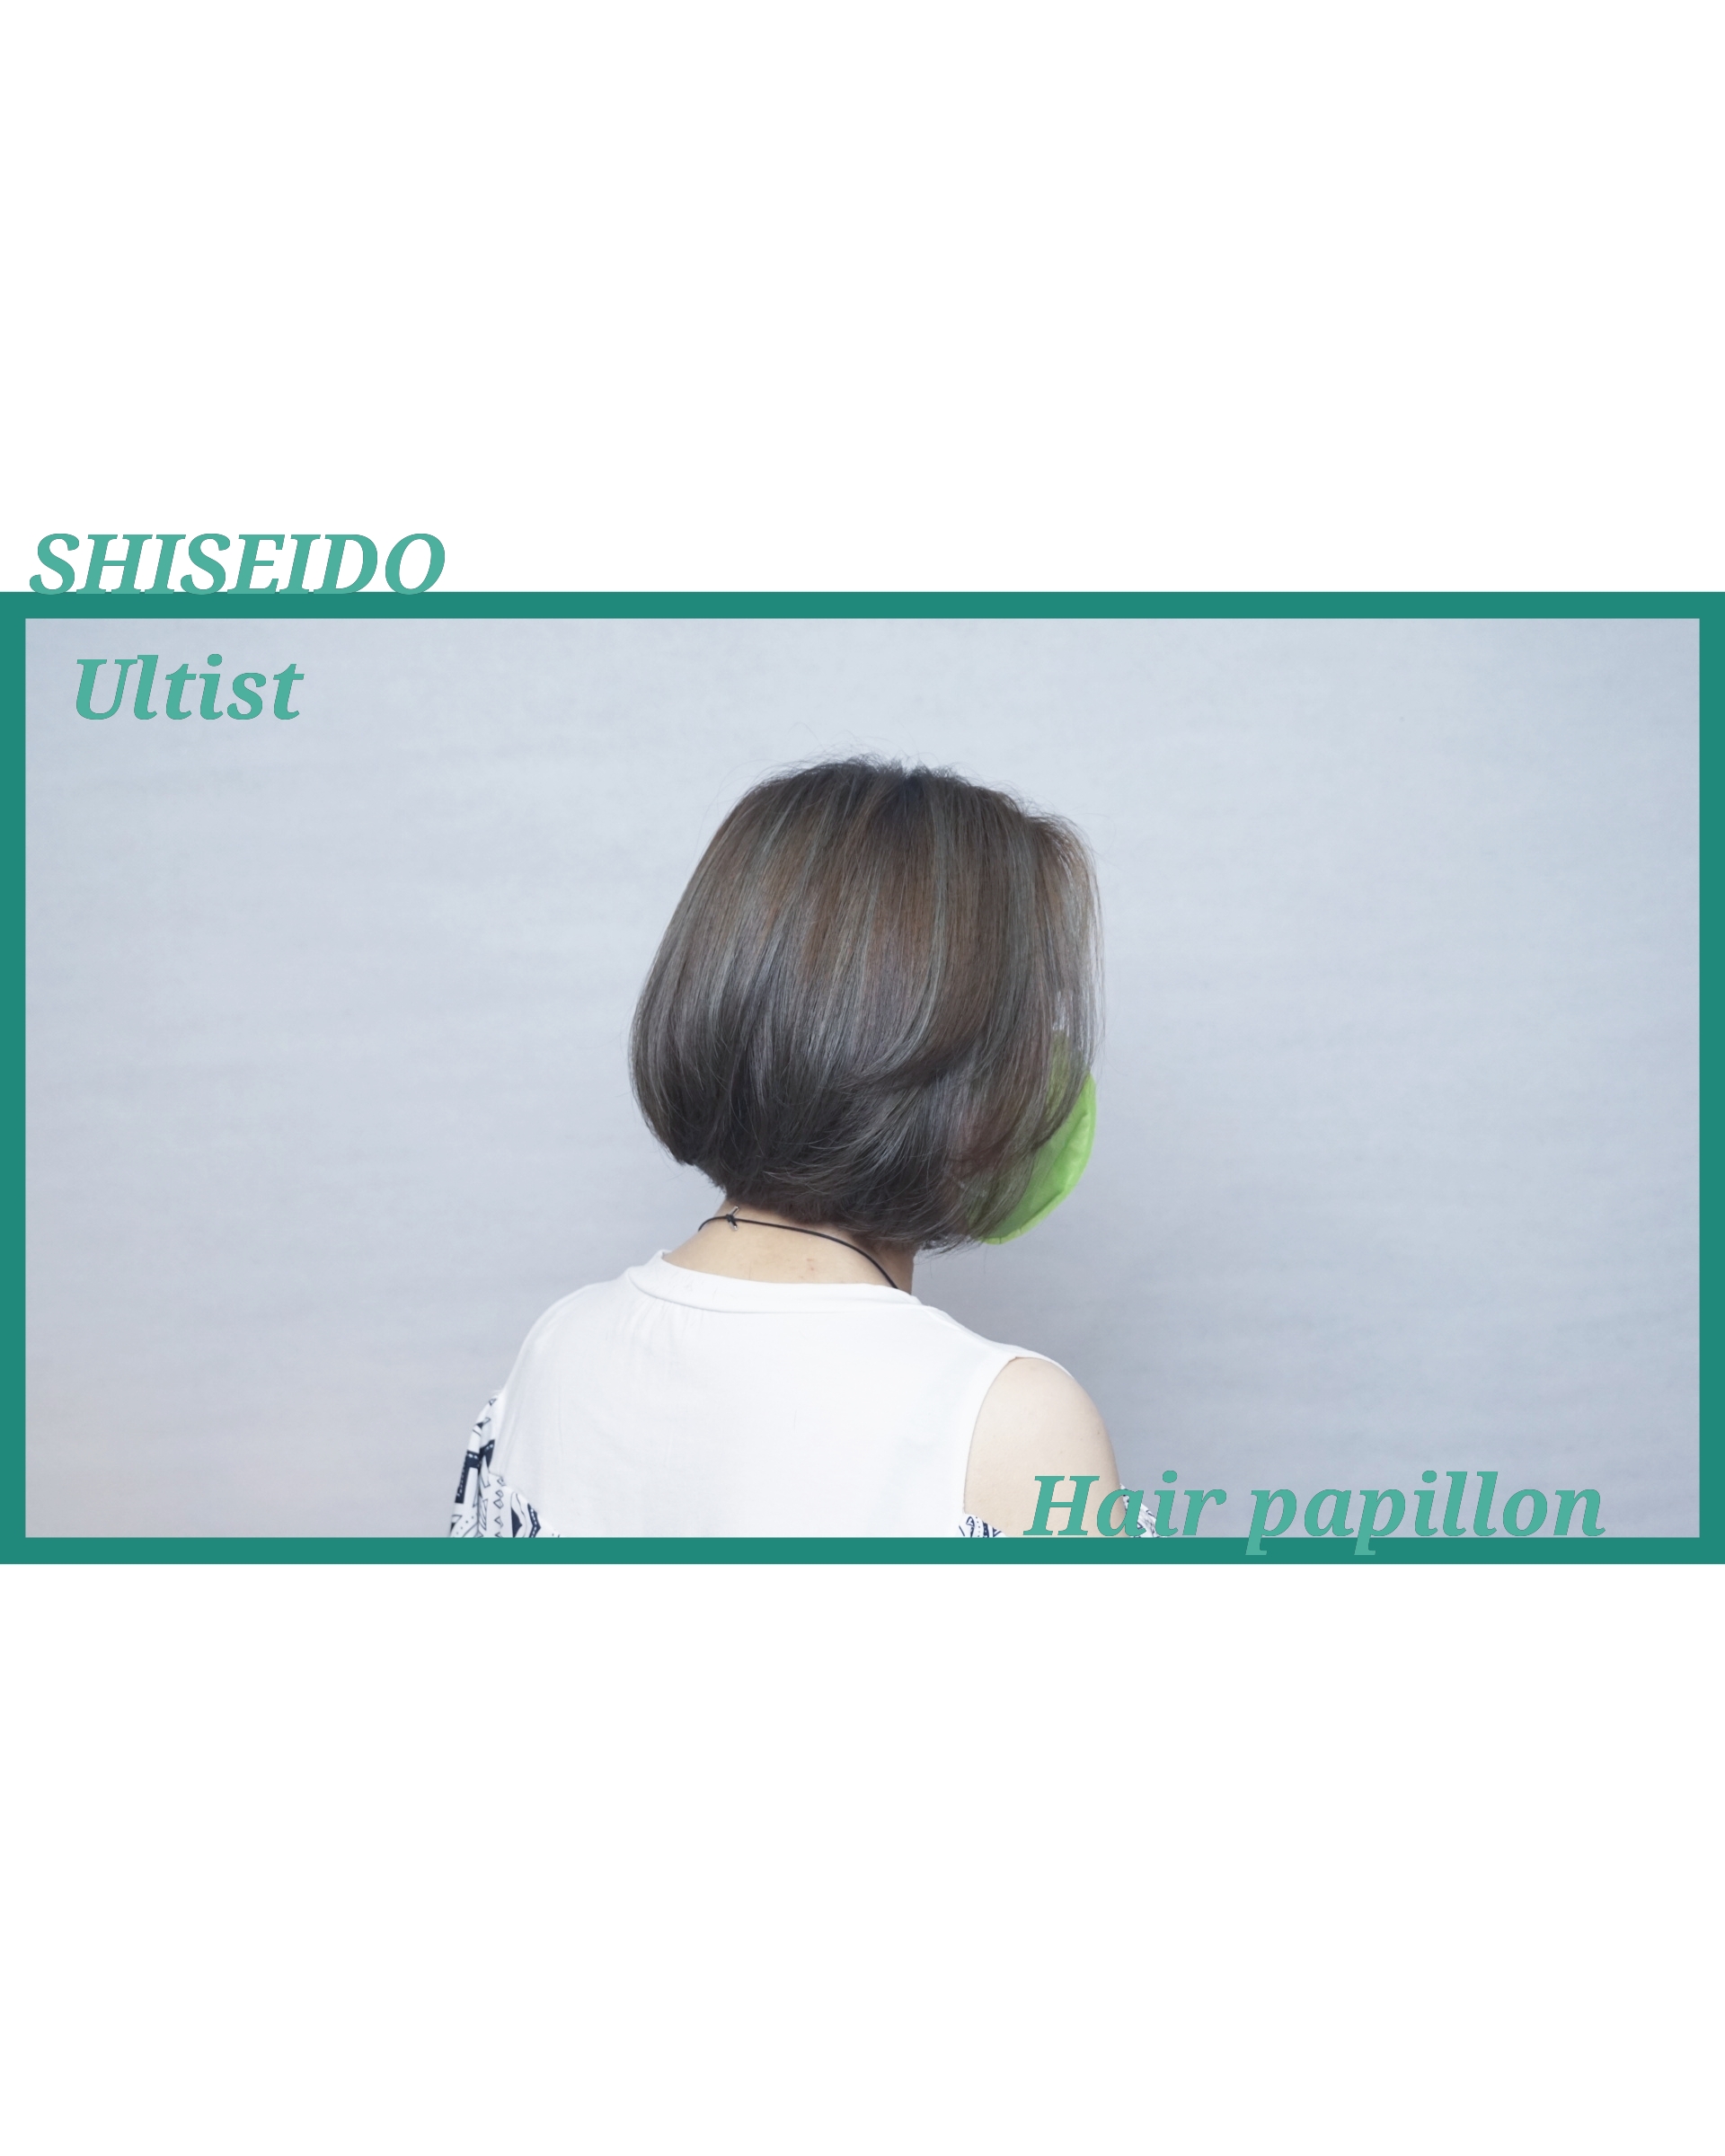 髮型作品參考:shiseido ultist